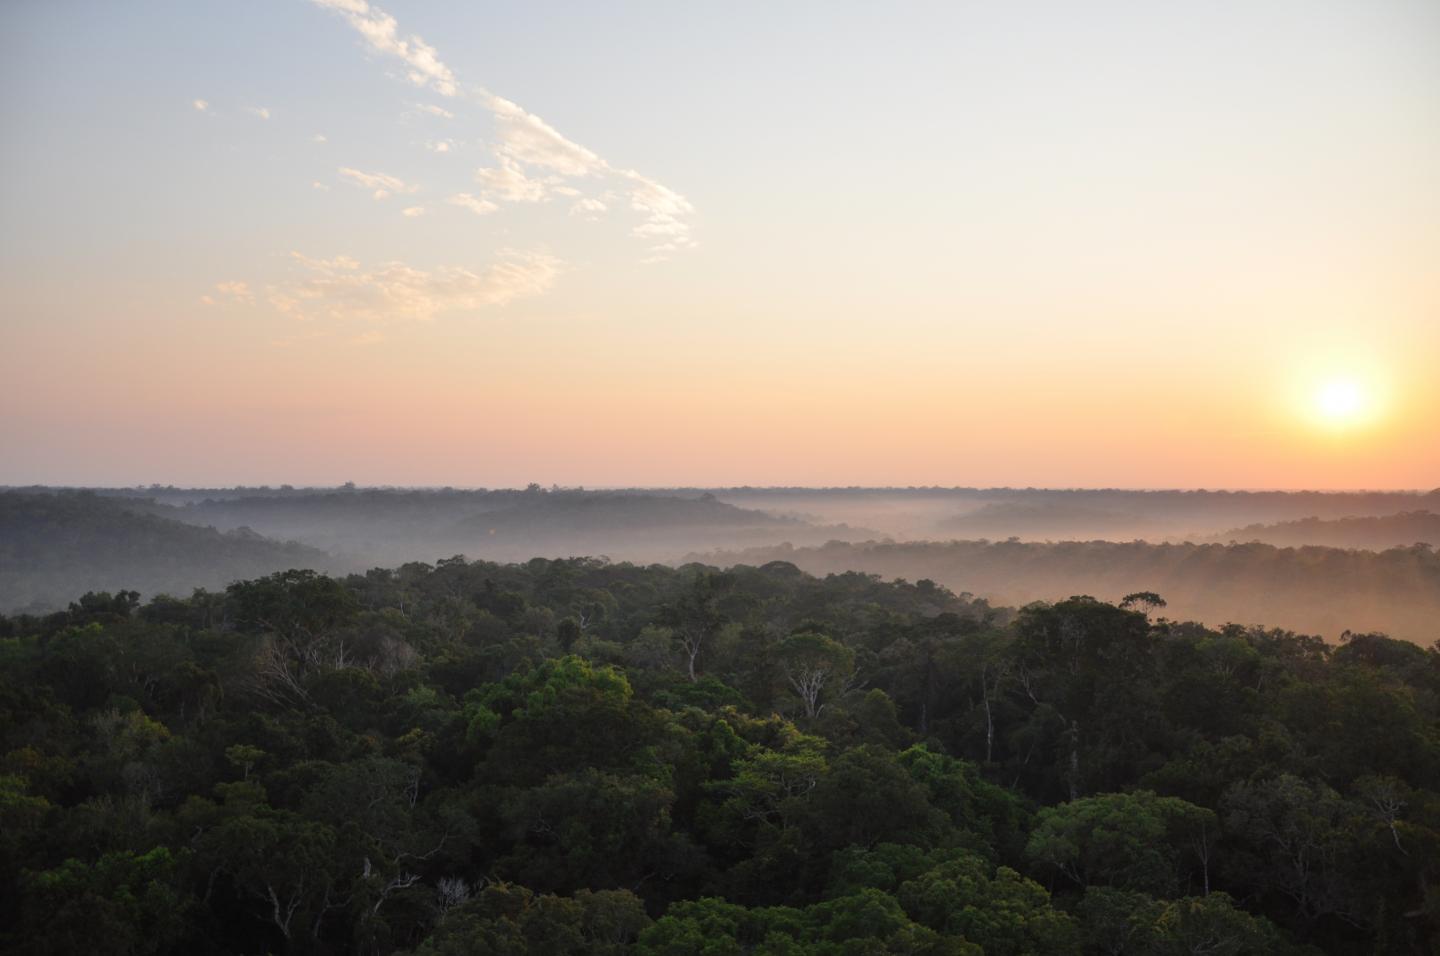 Sunrise over the Amazon rainforest